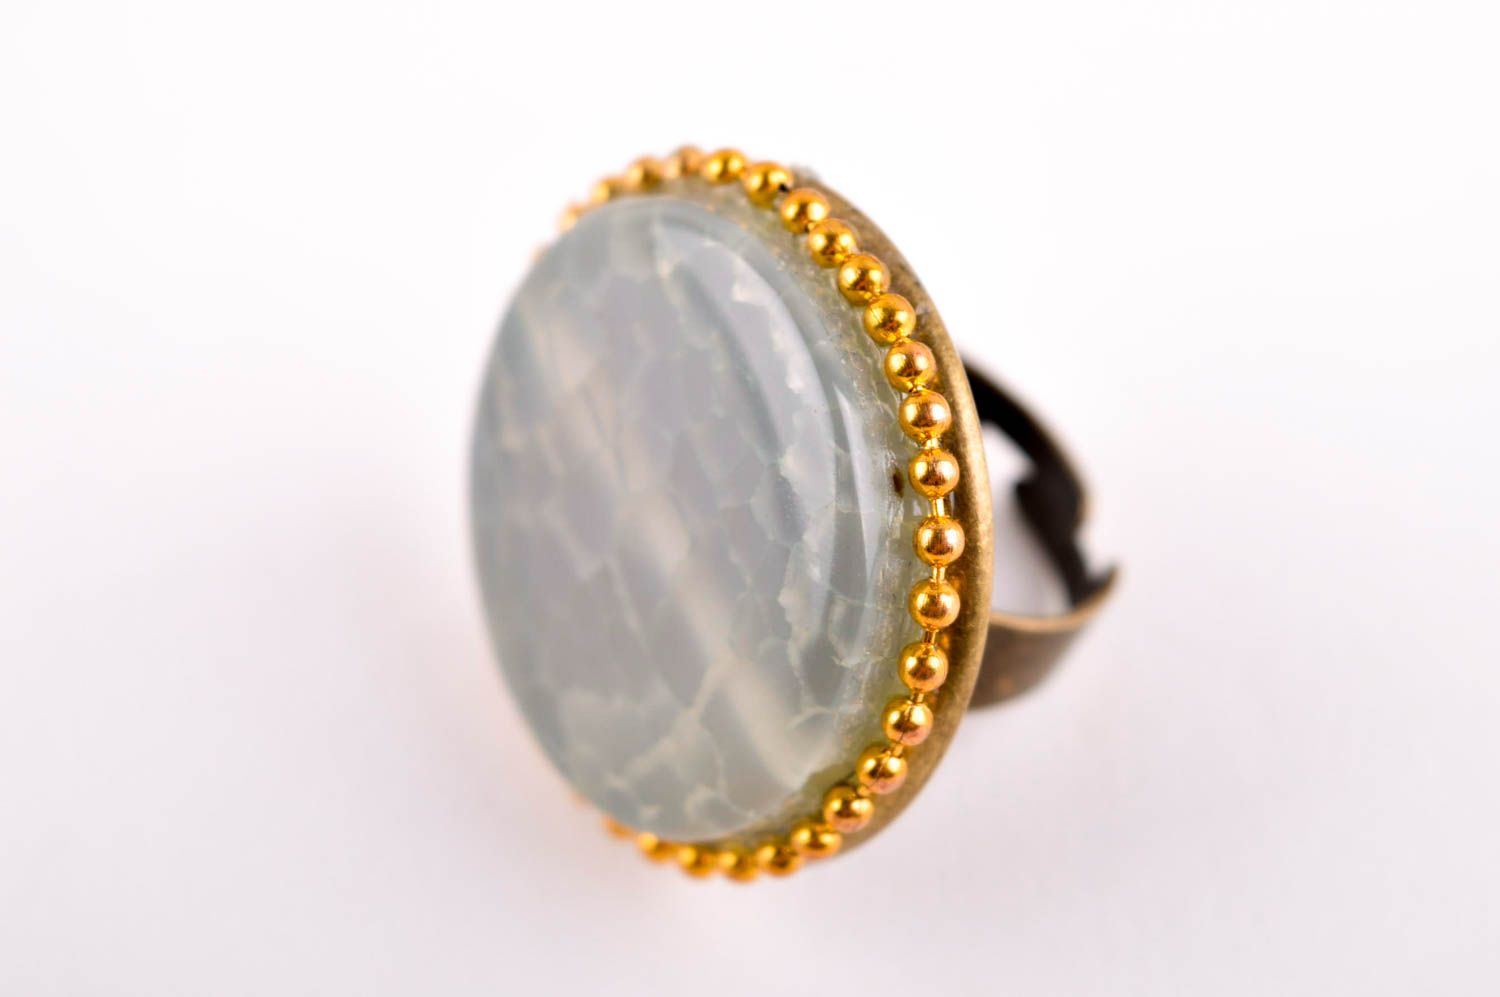 Handmade ring designer ring unusual ring with stones luxury accessories photo 2